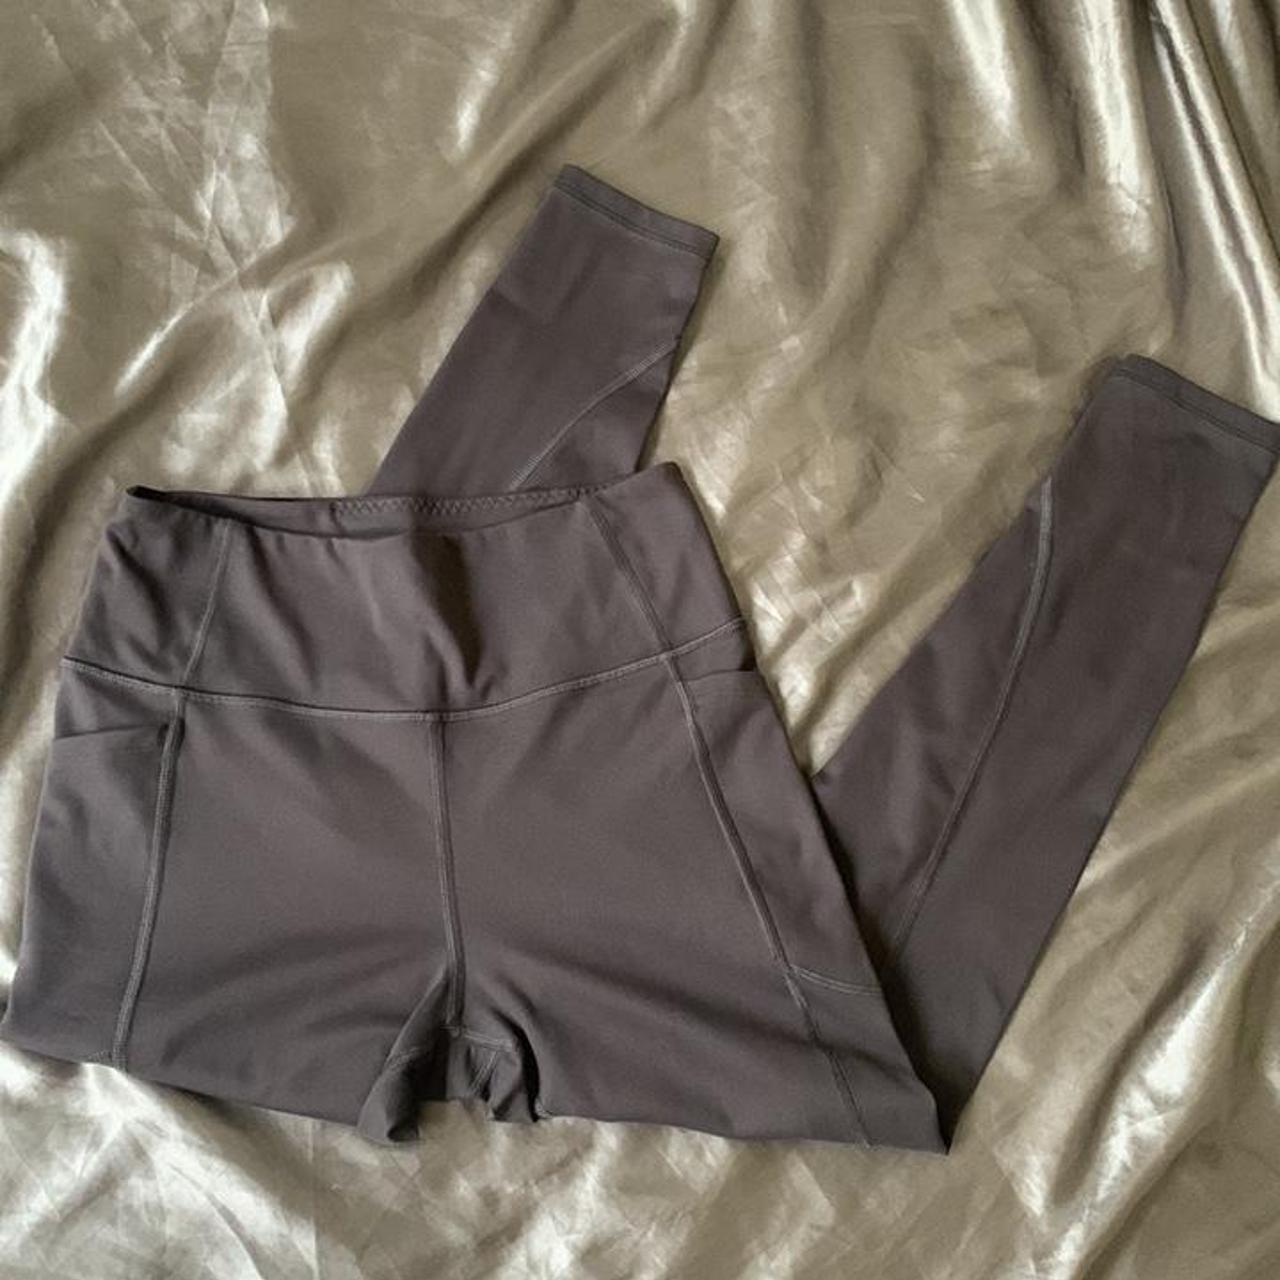 Victoria's Secret workout leggings in a stormy gray - Depop